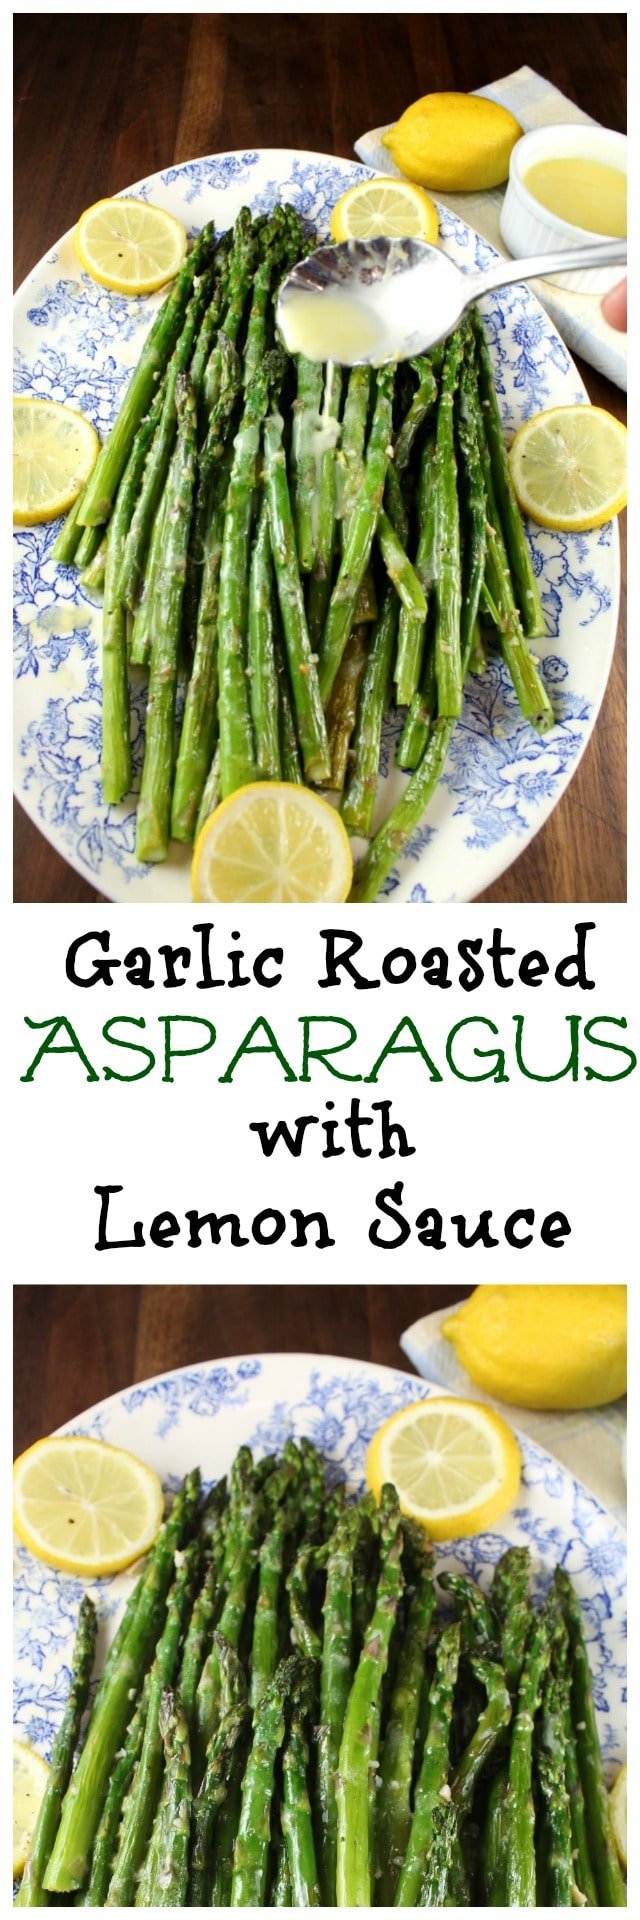 Garlic Roasted Asparagus with Lemon Sauce Recipe from MissintheKitchen.com